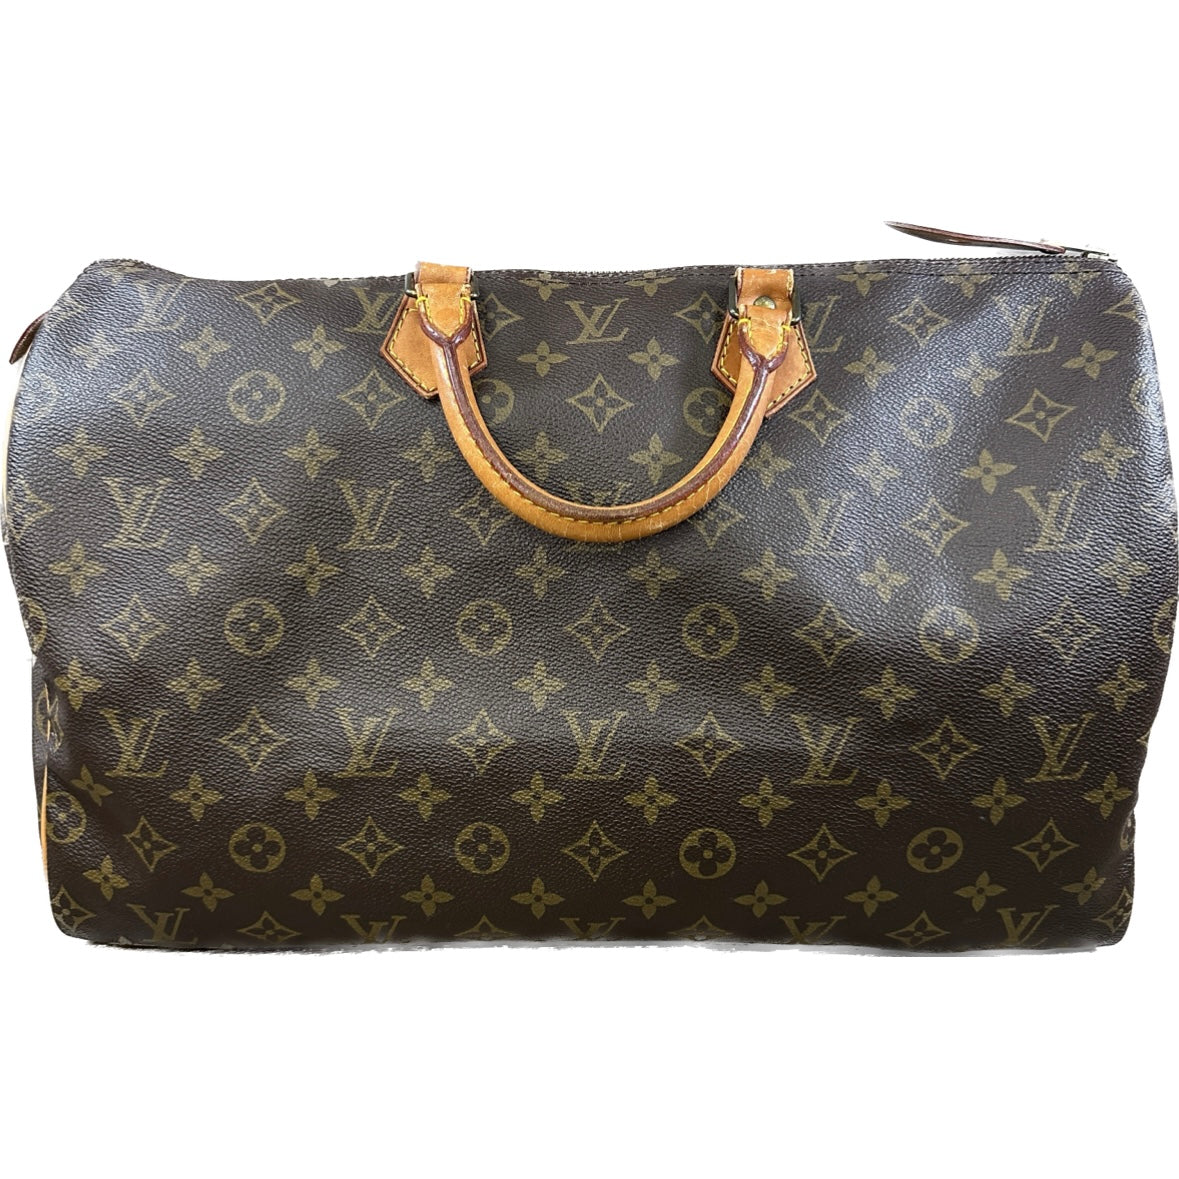 Pre-loved Louis Vuitton Vintage Speedy 40 Leather Handbag